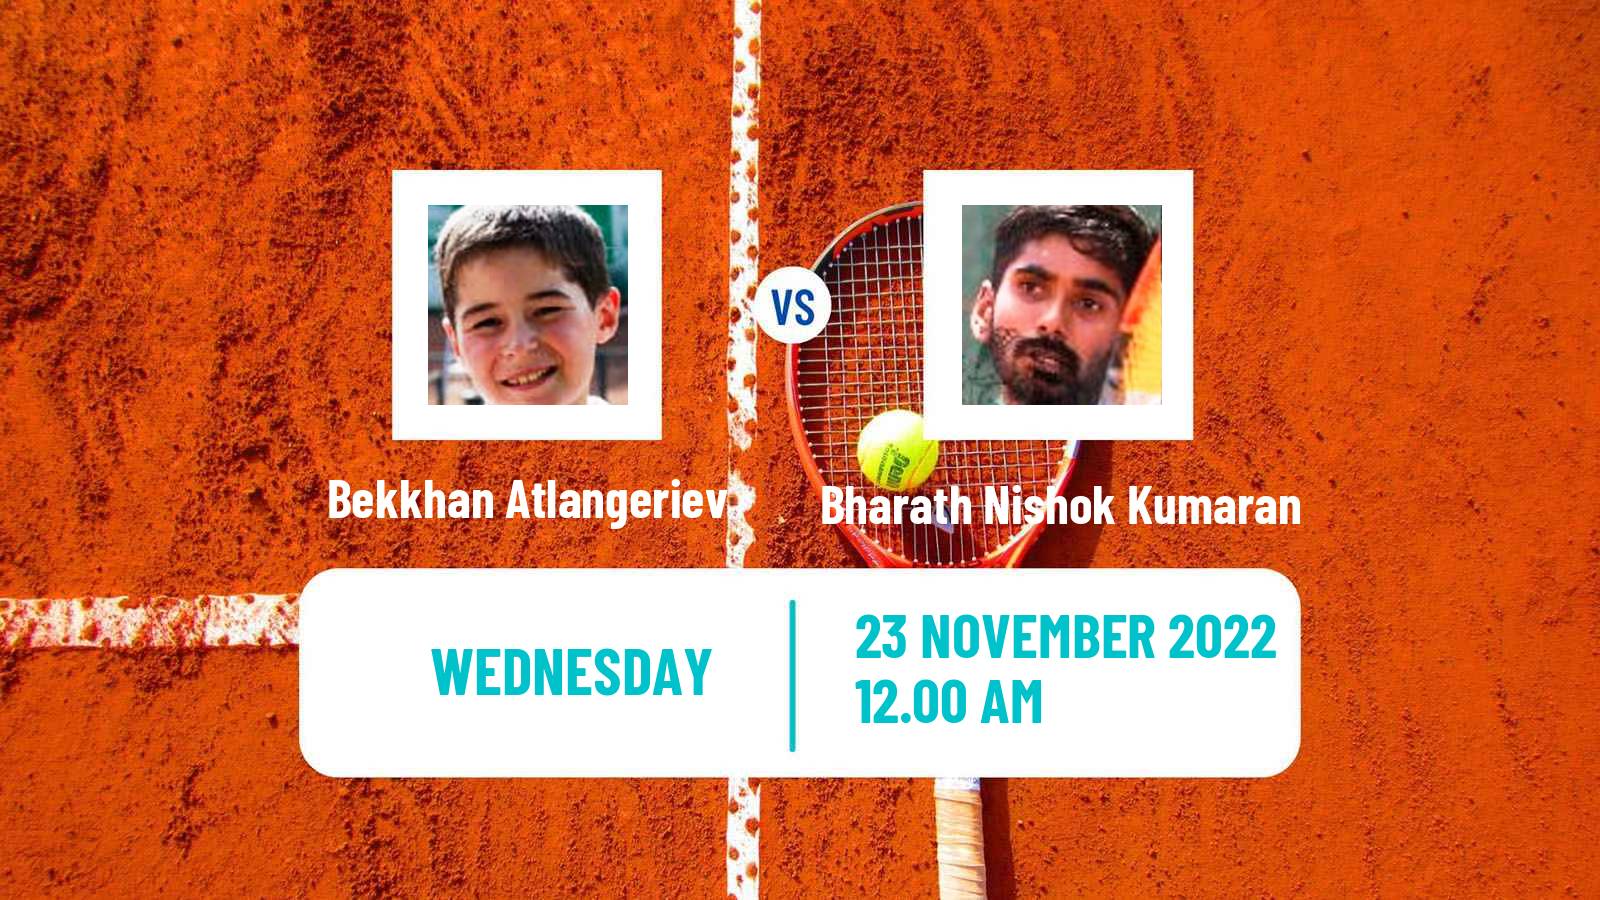 Tennis ITF Tournaments Bekkhan Atlangeriev - Bharath Nishok Kumaran